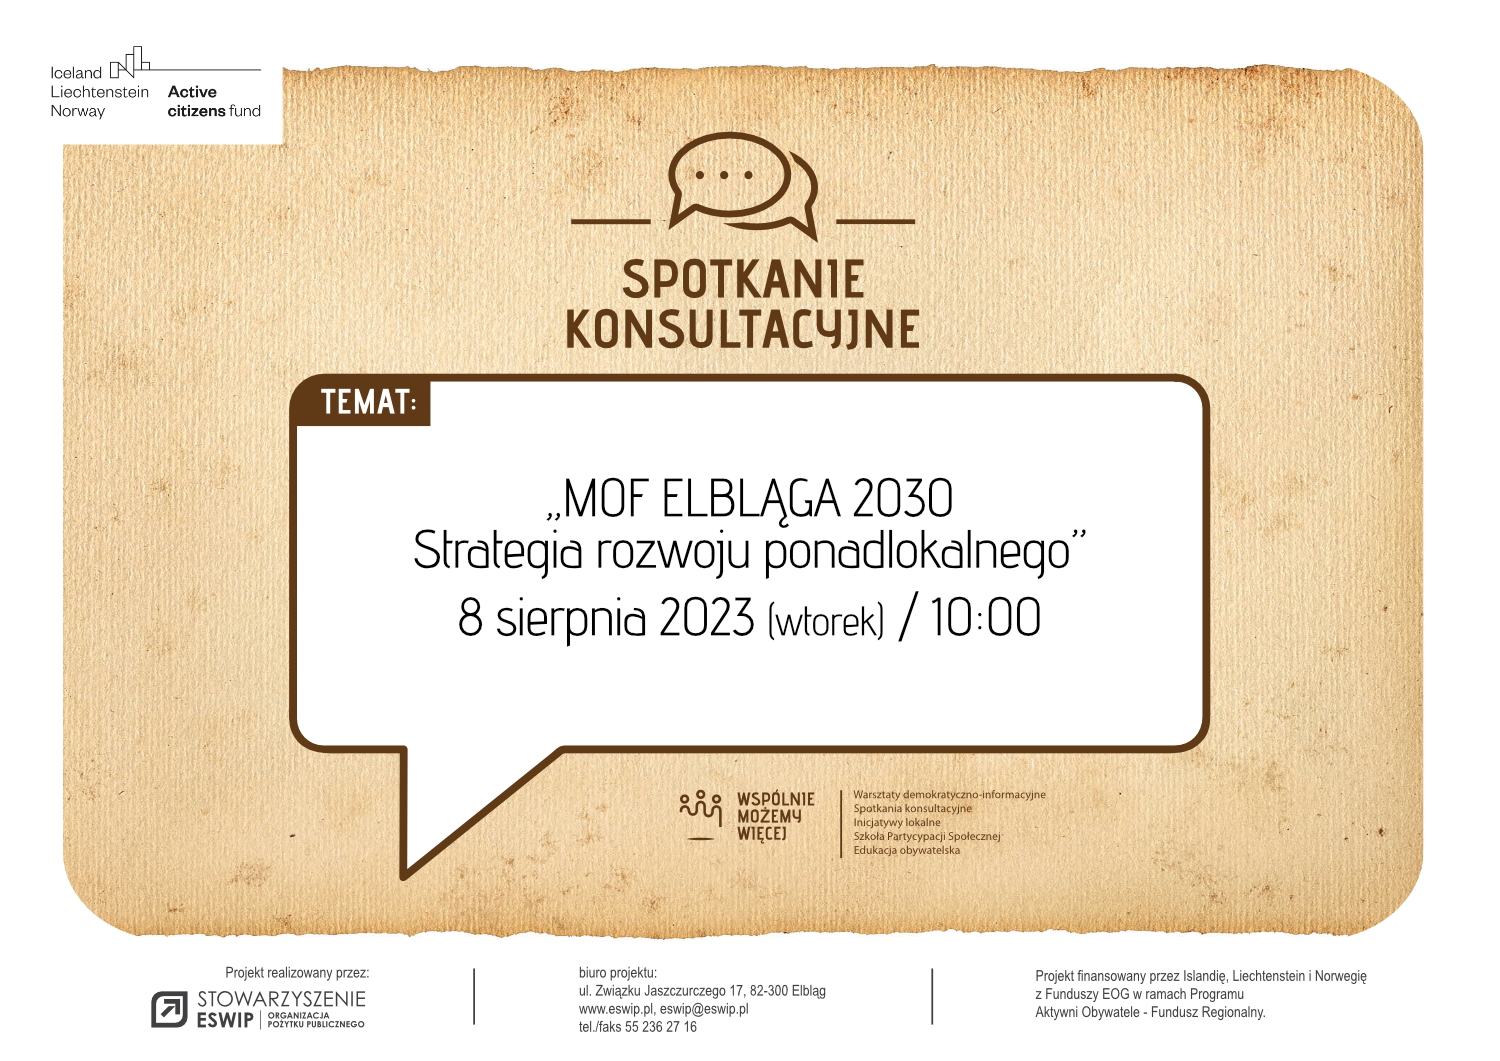 Konsultacja strategii rozwoju ponadlokalnego MOF Elbląga